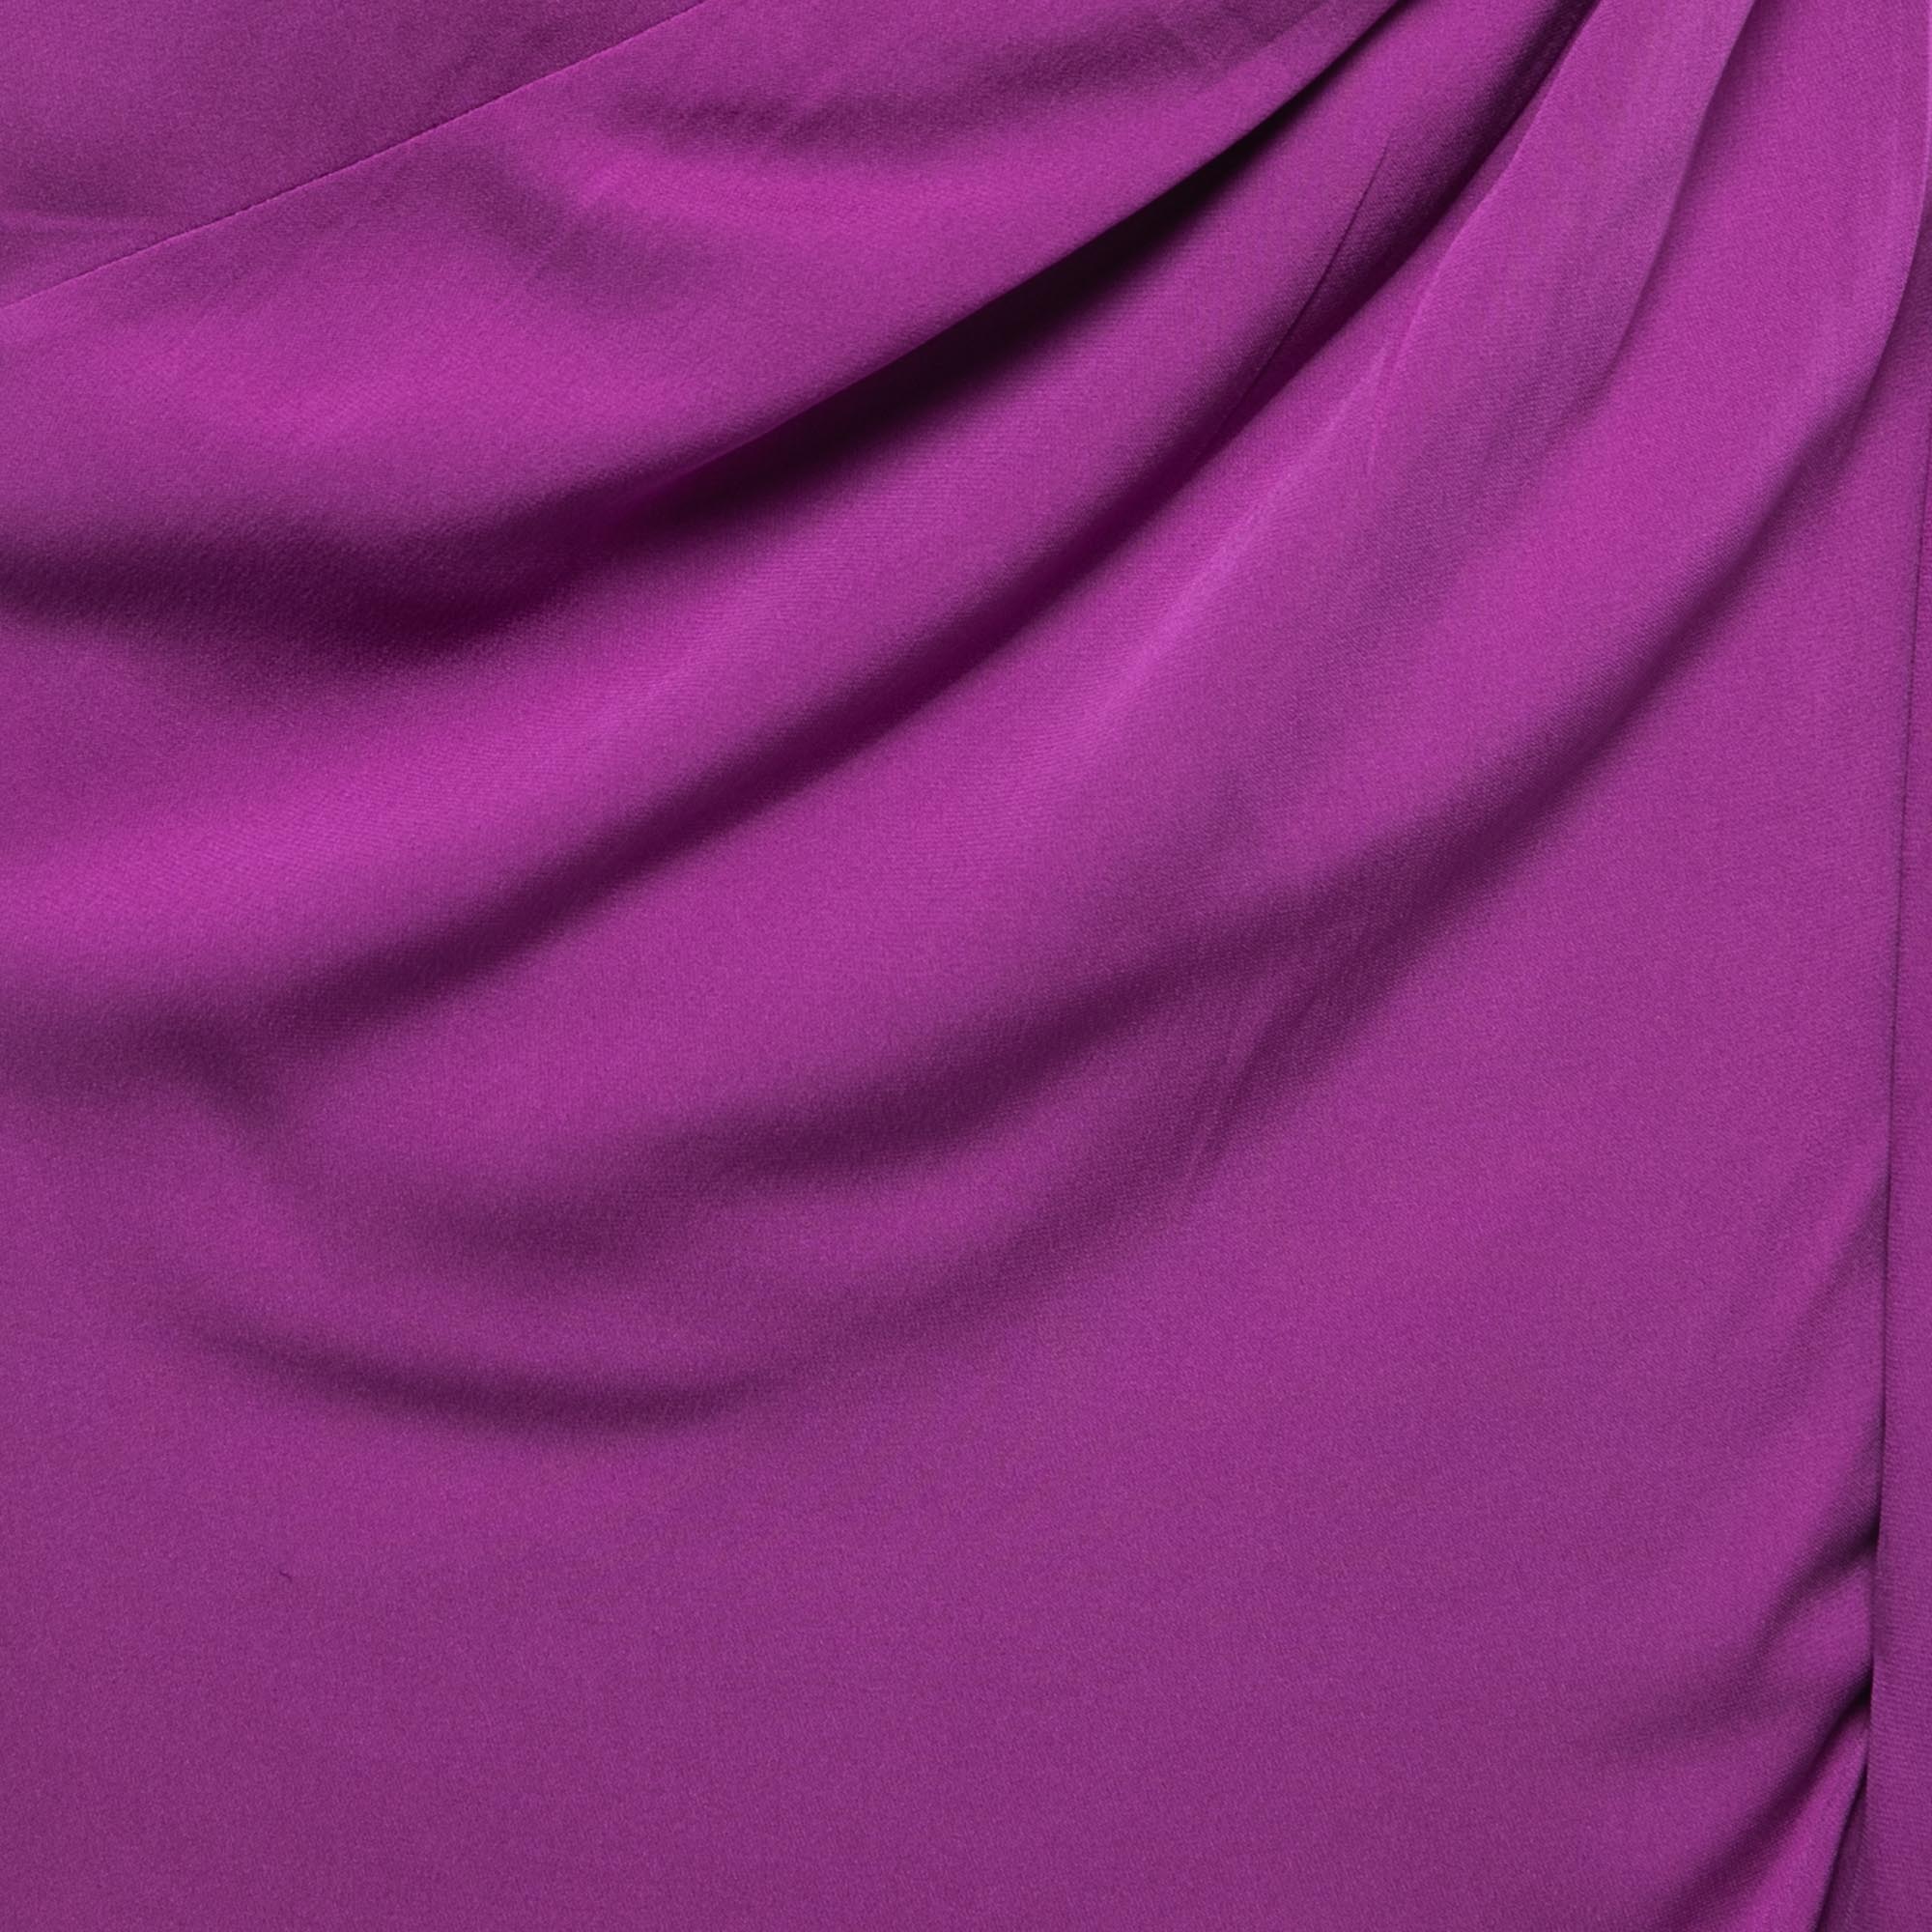 Diane Von Furstenberg Purple Silk Draped Midi Skirt S